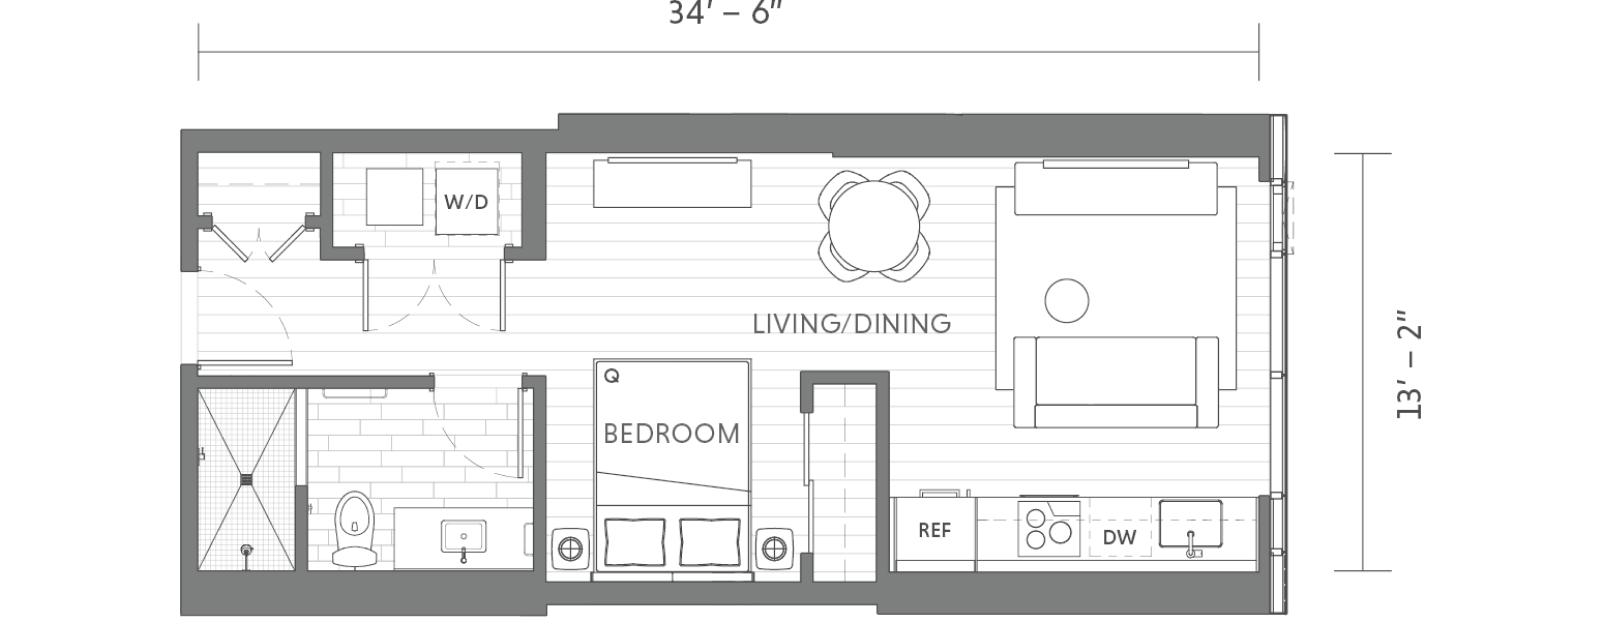 Residence 24 floor plan